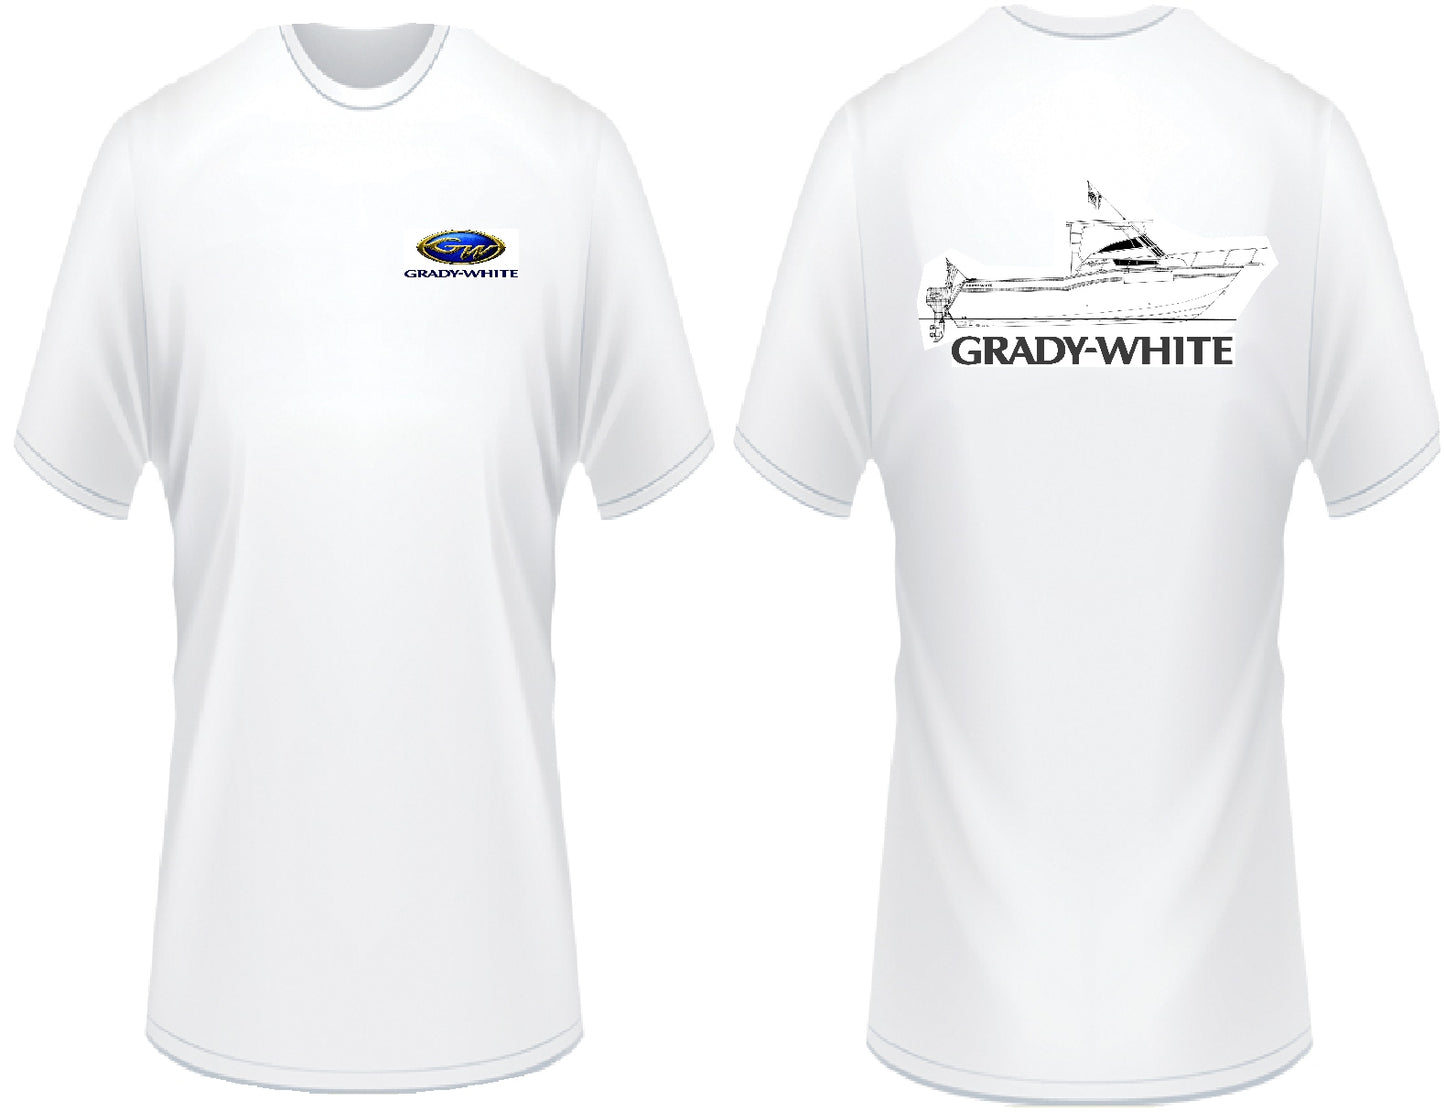 Grady White Line Drawing T-Shirt